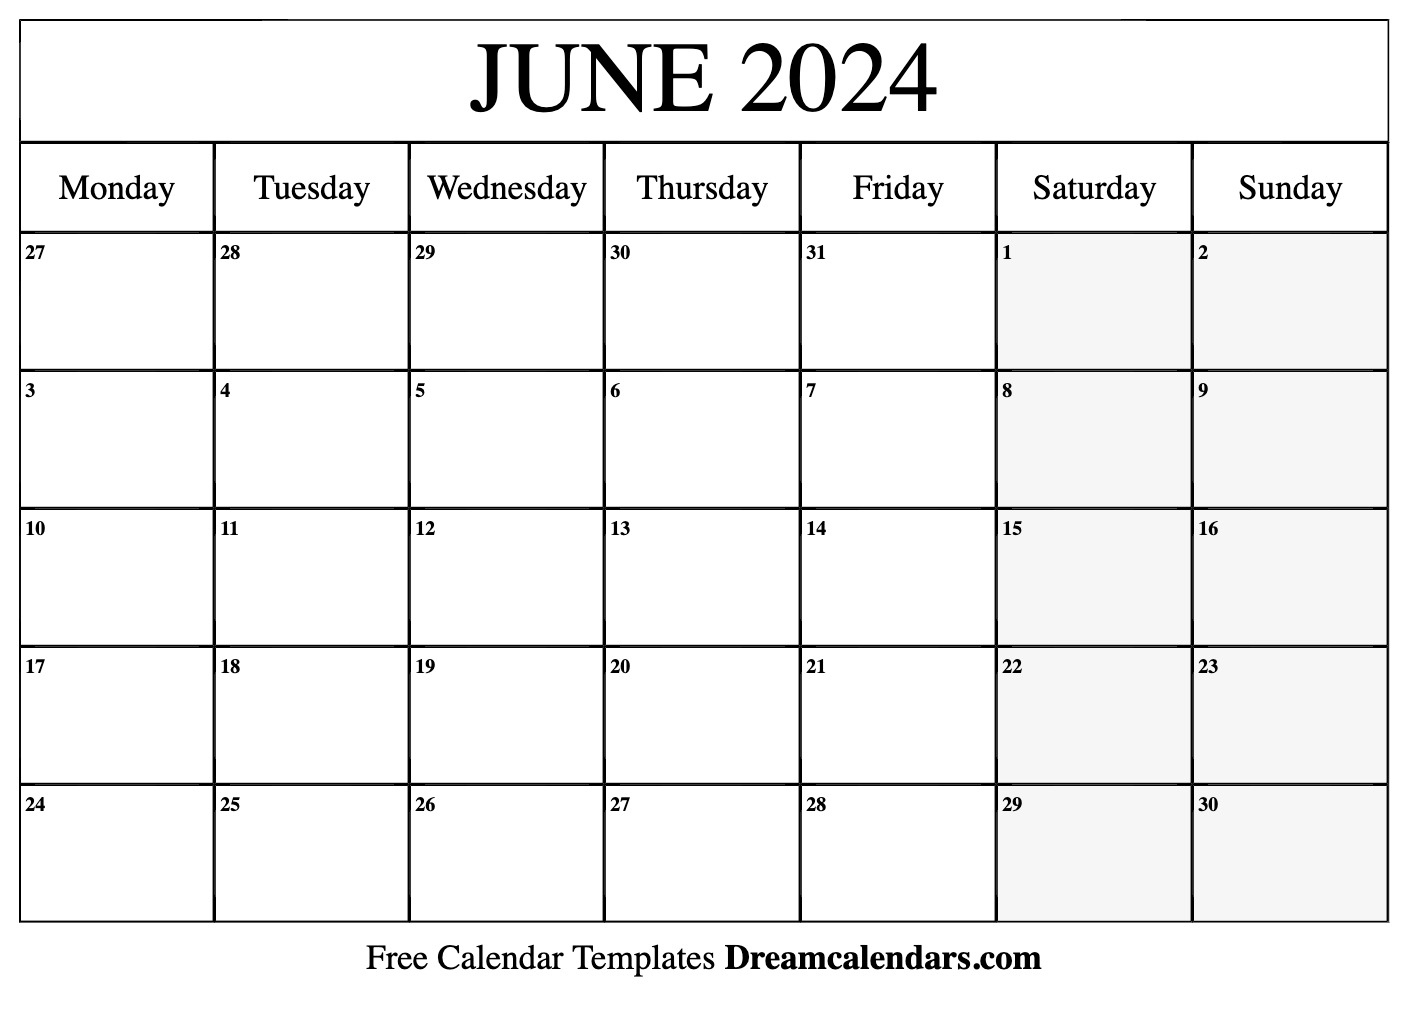 June 2024 Calendar | Free Blank Printable With Holidays throughout Free Printable Calendar 2024 June Word